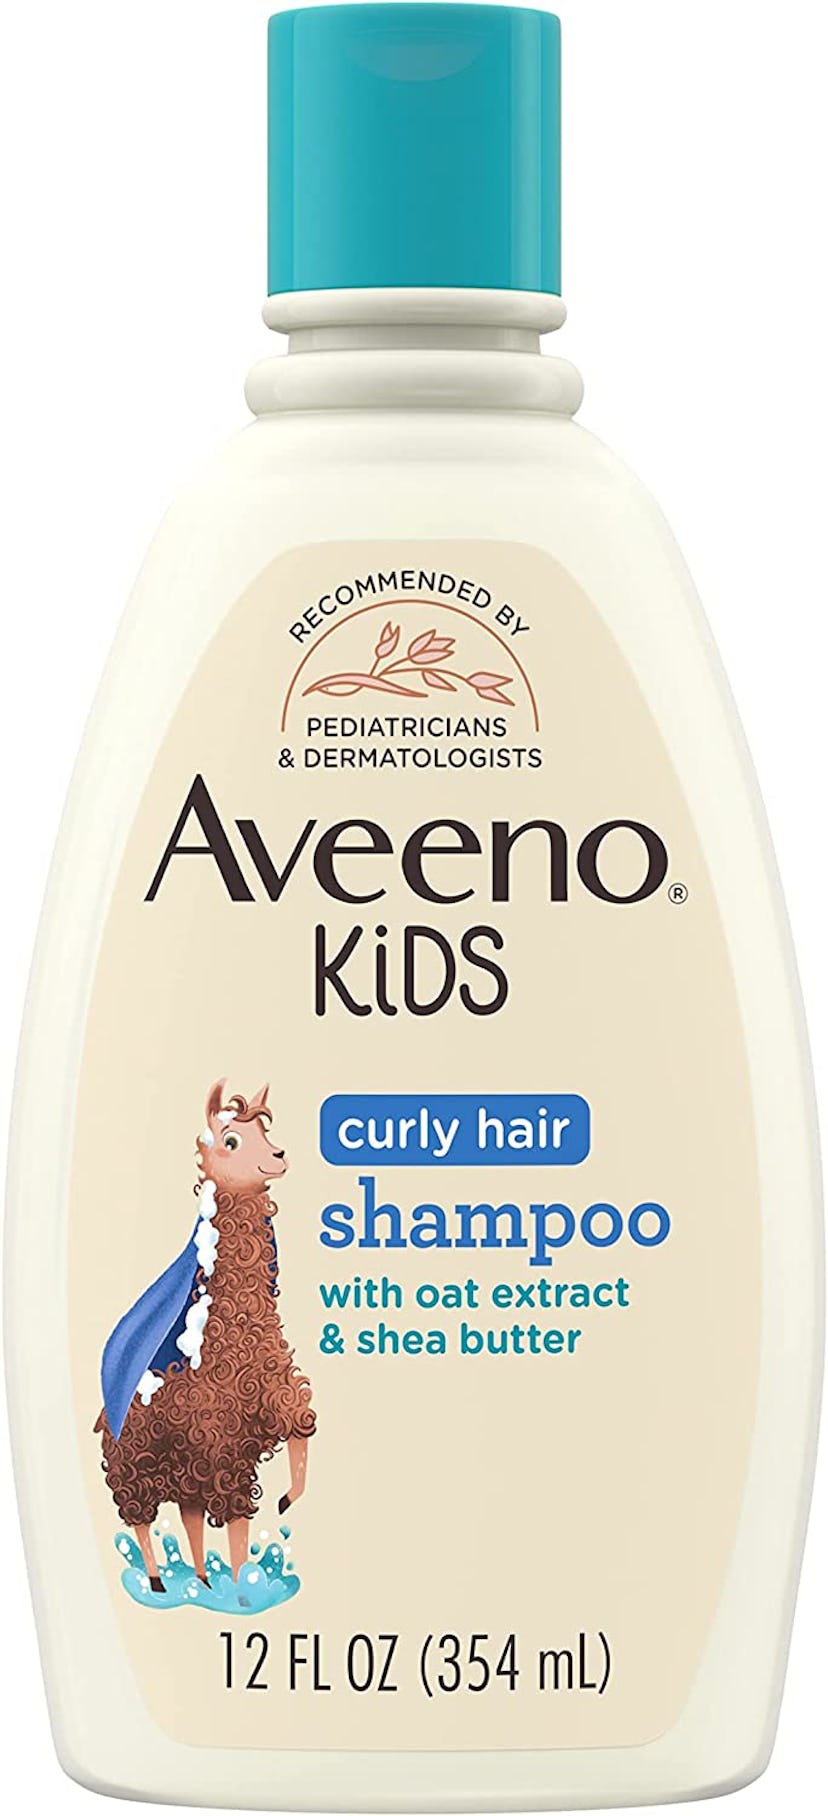 Aveeno Kids Curly Hair Shampoo